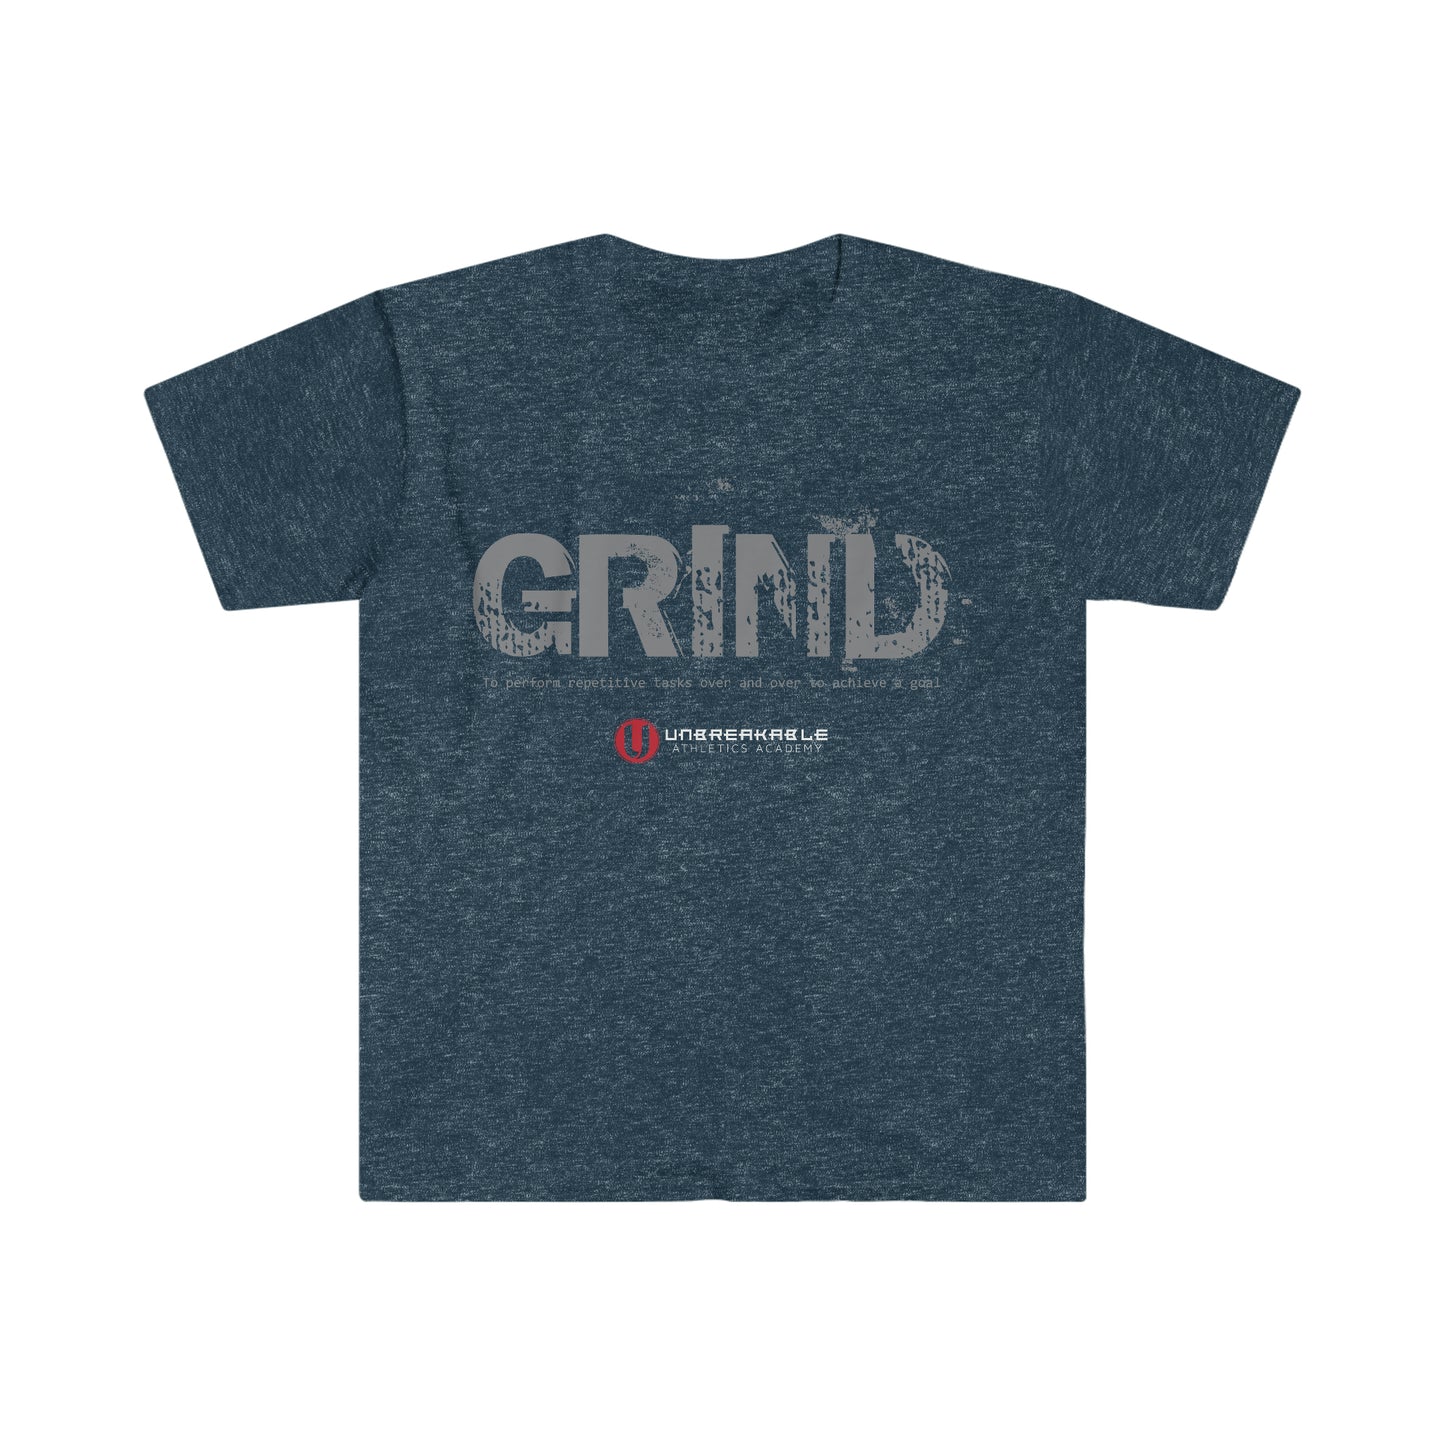 GRIND shirt - Gildan Softstyle shirt